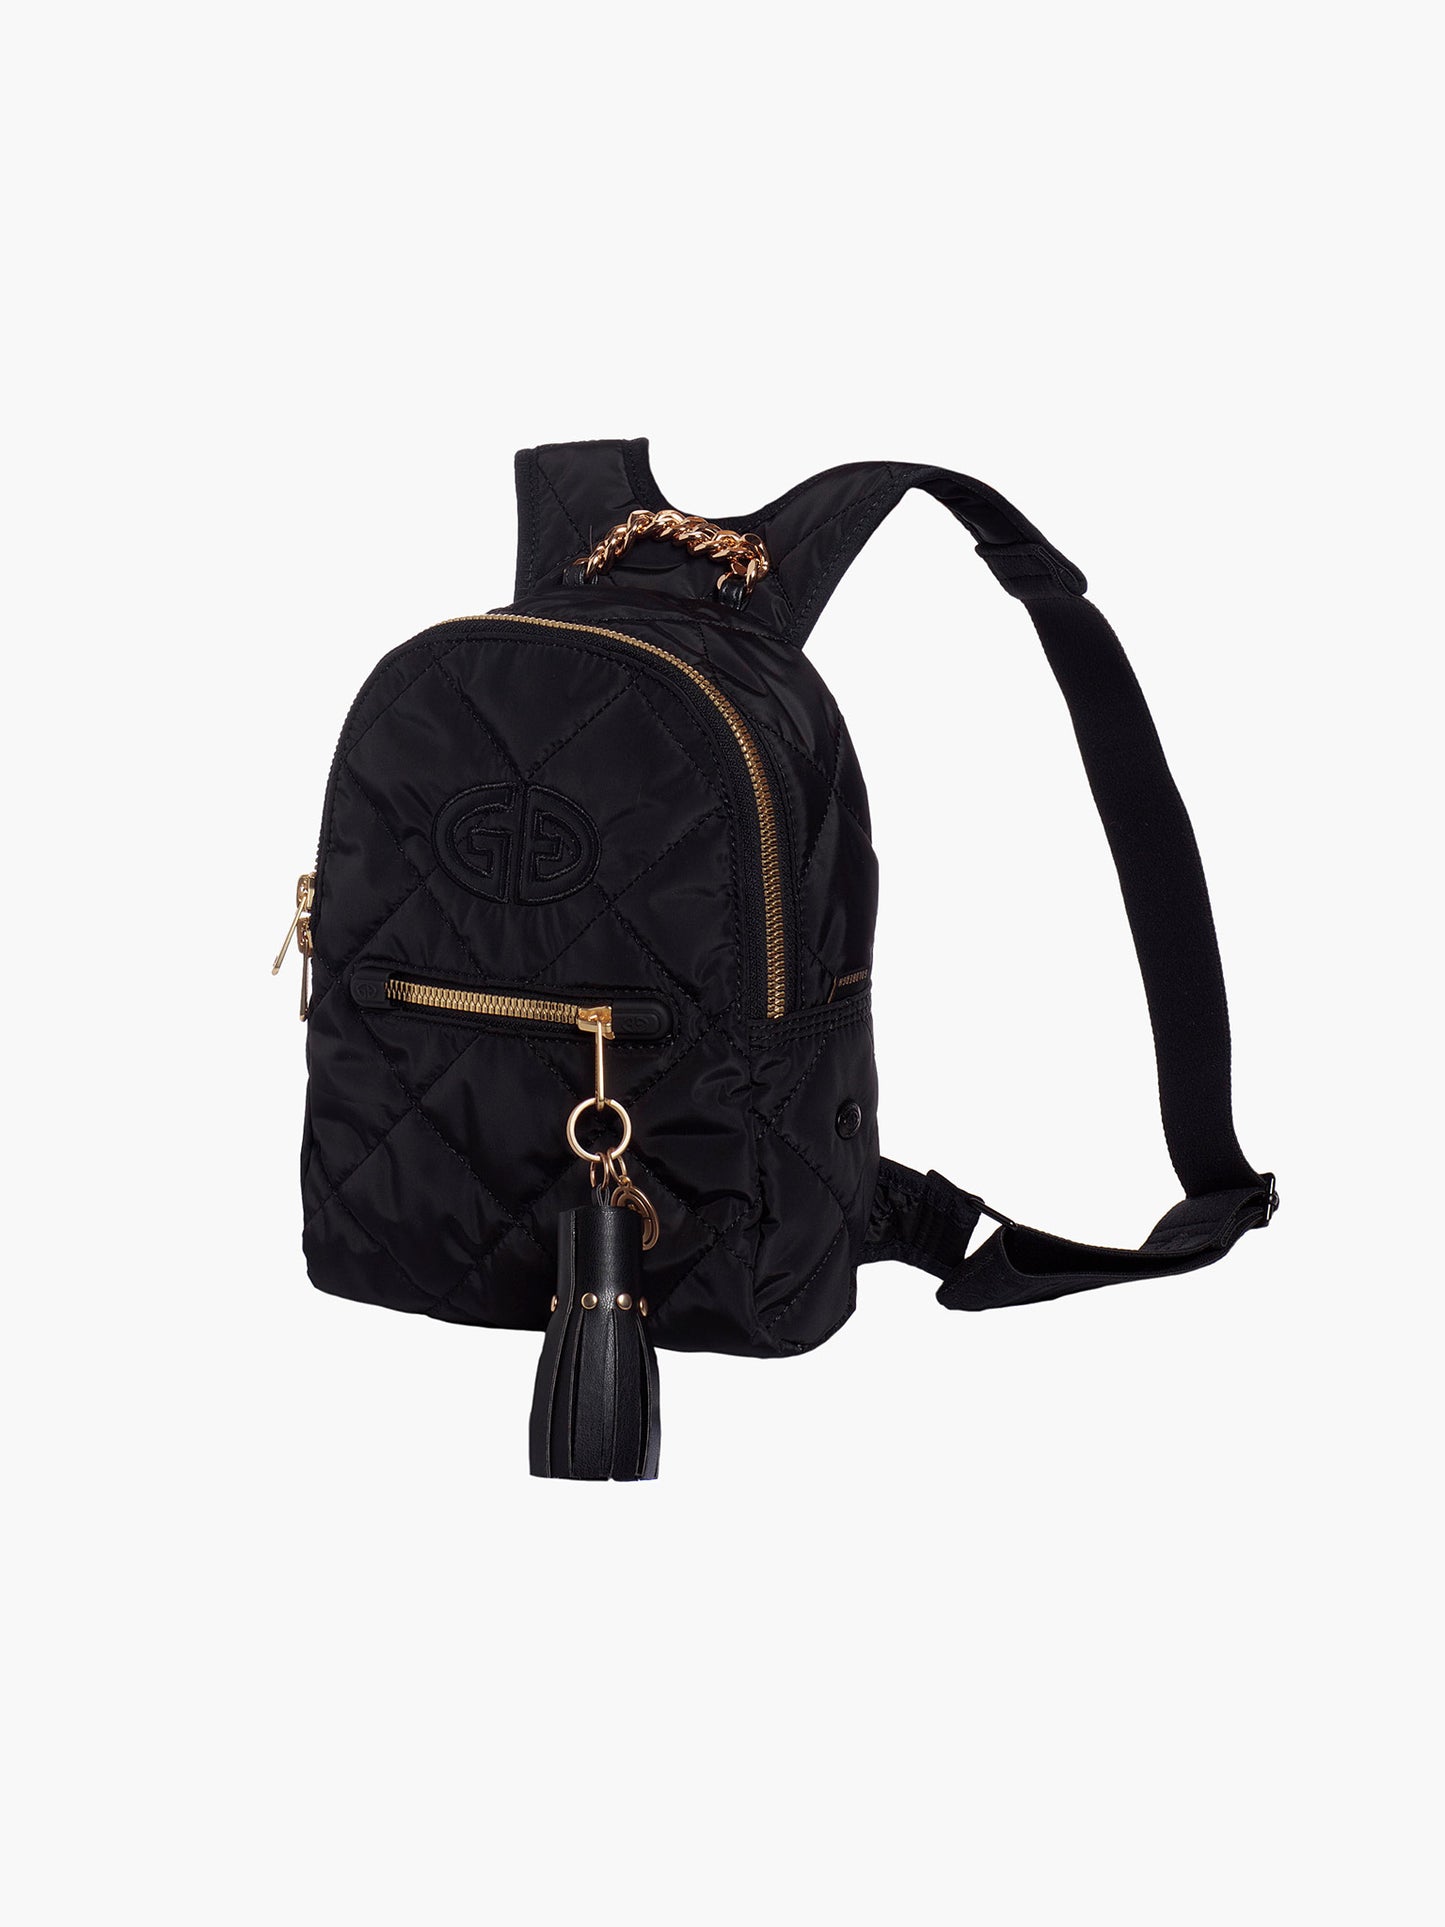 LITTLE backpack